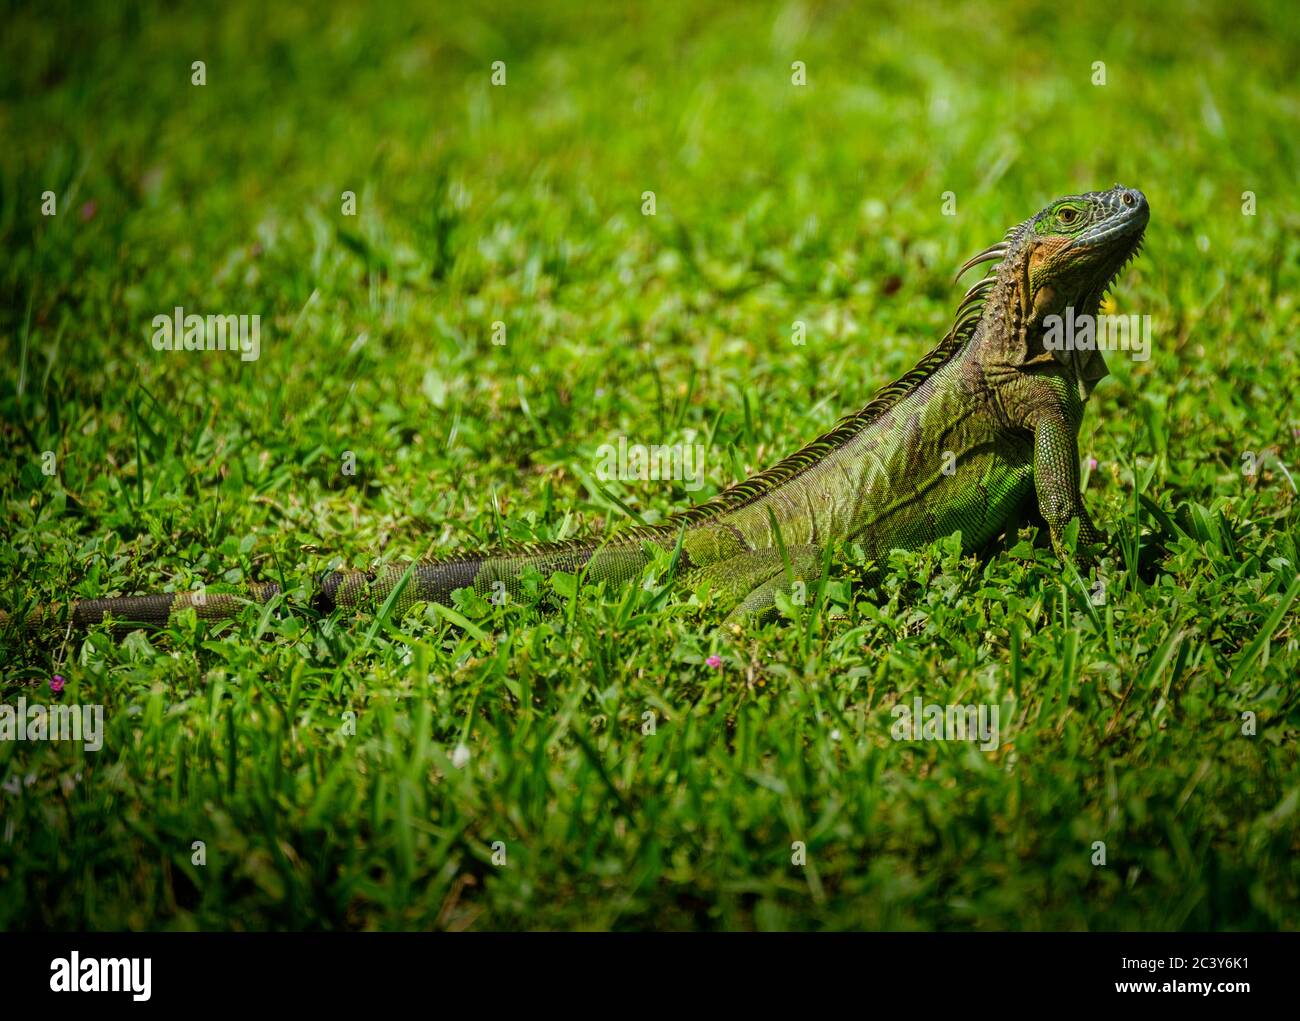 Iguana on grass Stock Photo